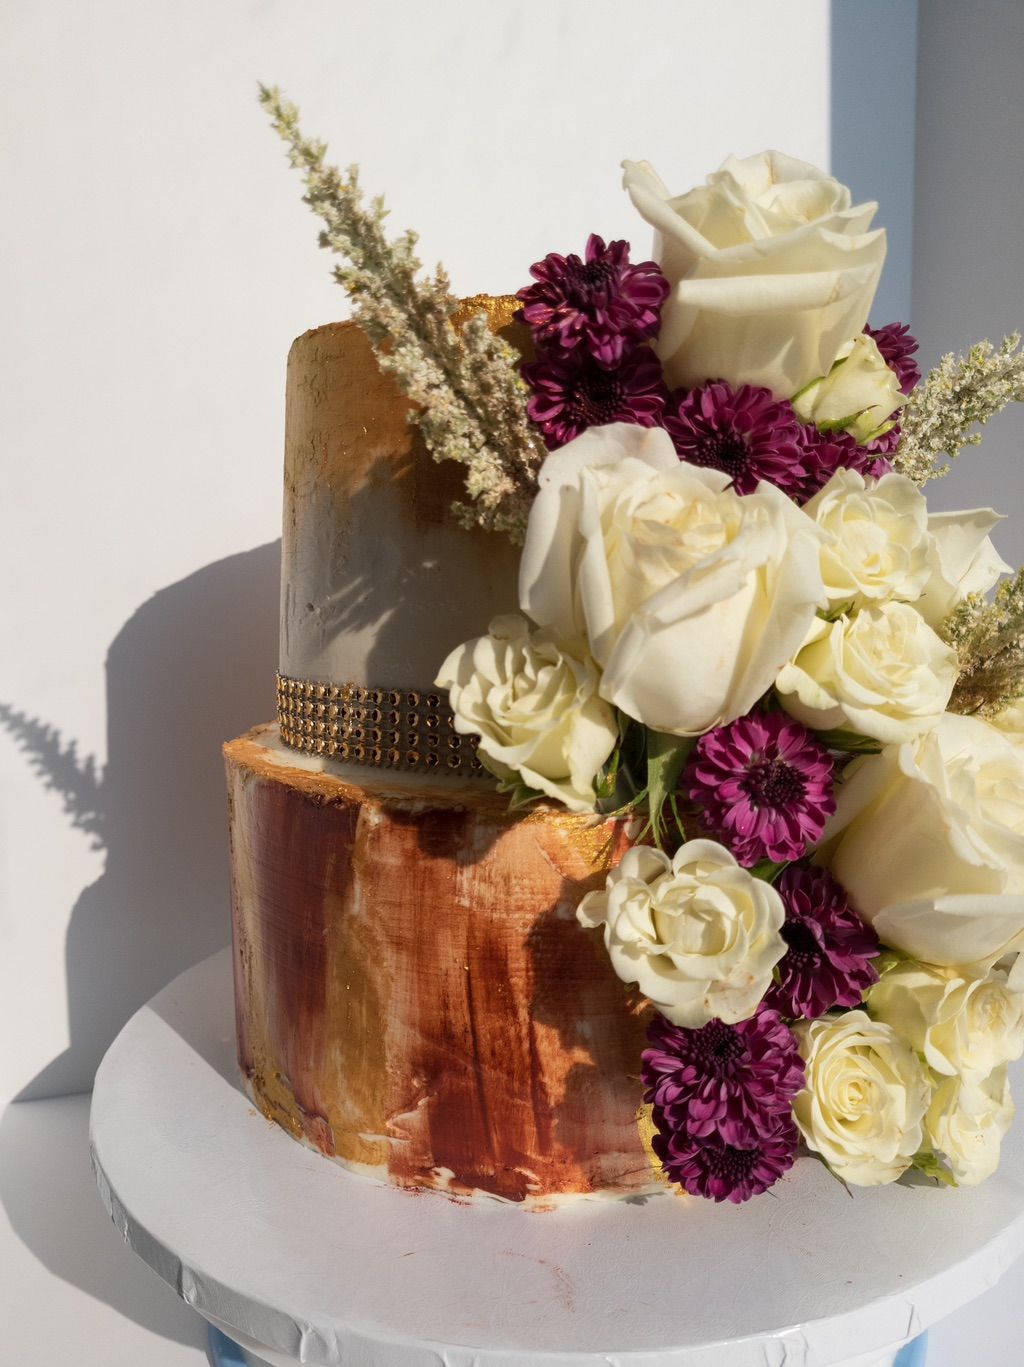 The Pink Rose Cake Boutique - When fashion is life… . . . . #designer  #christianlouboutin #louisvuitton #chanel #versace #birthday #cake  #highfashion #birthdaycake #upscale #designercakes #wedding #weddingcakes  #charlotteweddings #birthdaycake